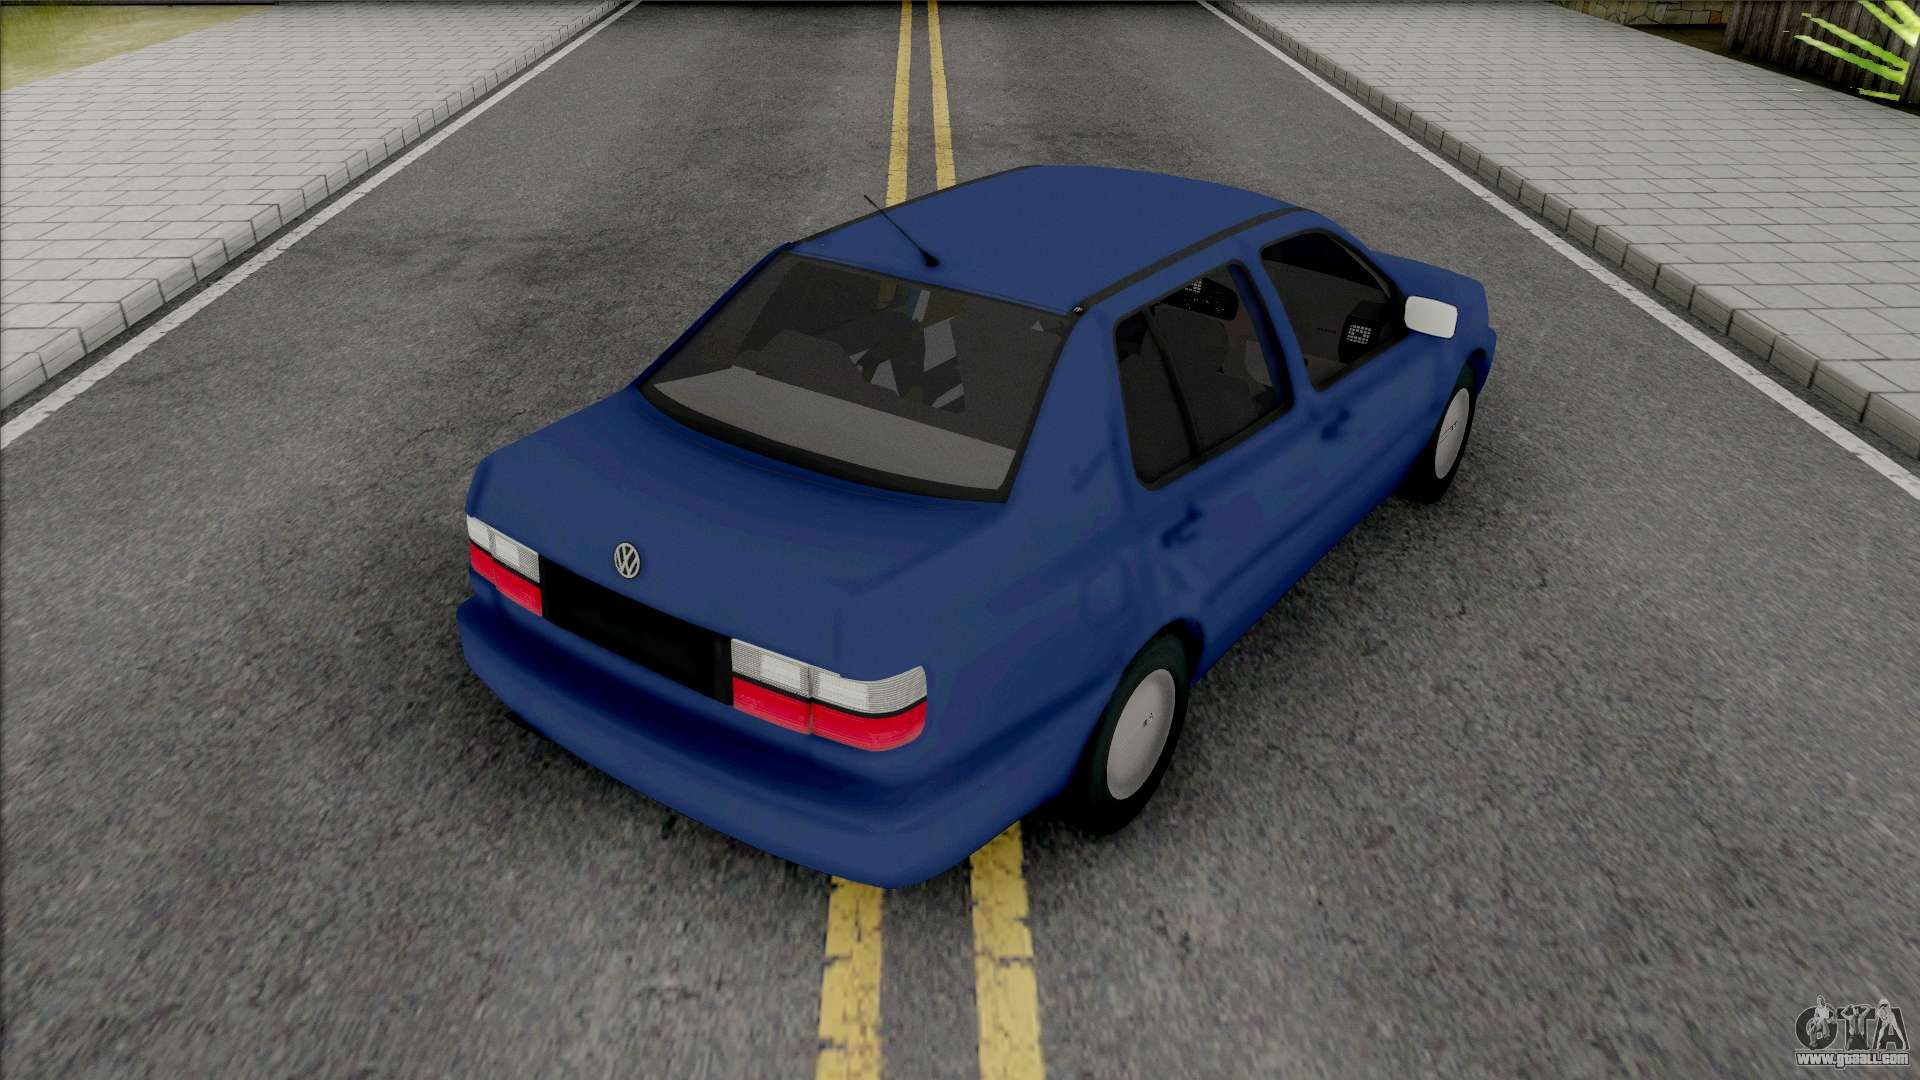 Volkswagen Vento (Golf Mk3 Front) For Gta San Andreas